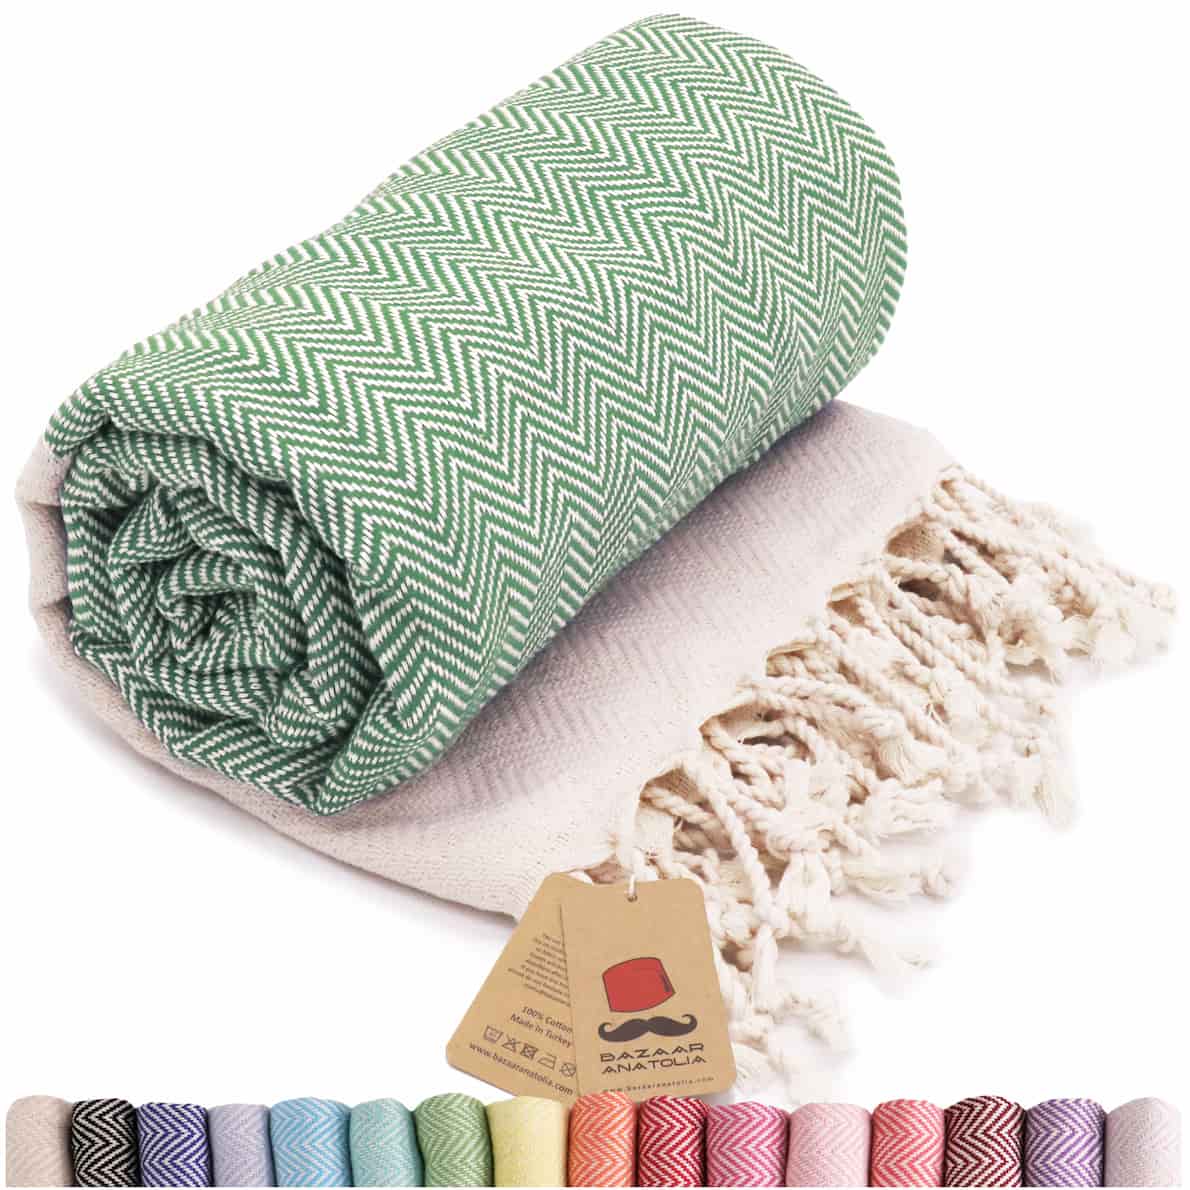 sage green turkish beach towel herringbone peshtemal towels sand free quick dry cotton